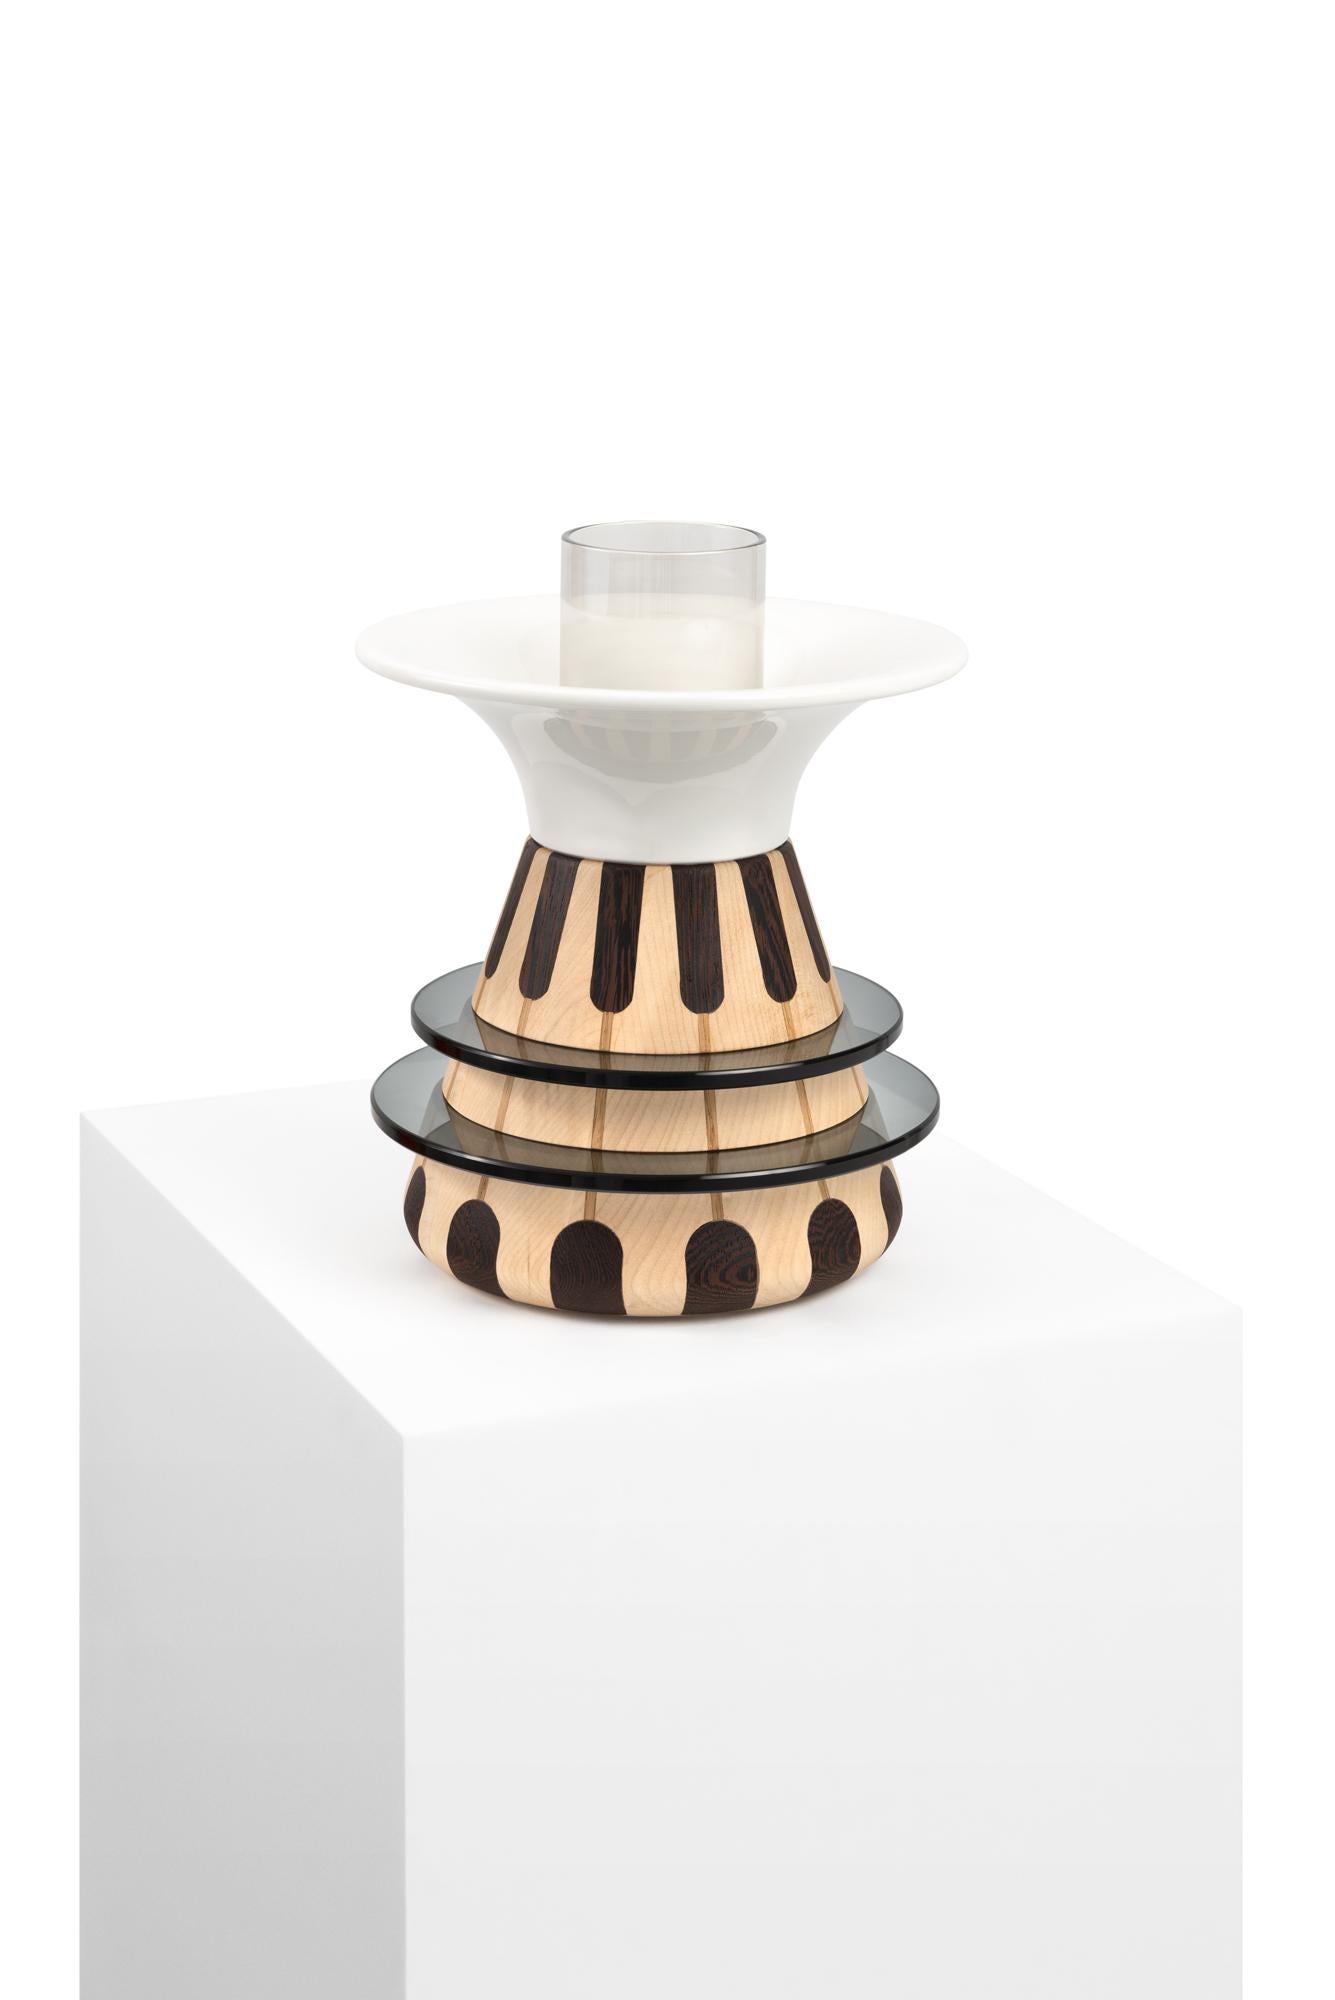 21st Century Elena Salmistraro Vase Inlaid Wood Glass Ceramic Catodo Scapin In New Condition For Sale In Tezze sul Brenta, IT